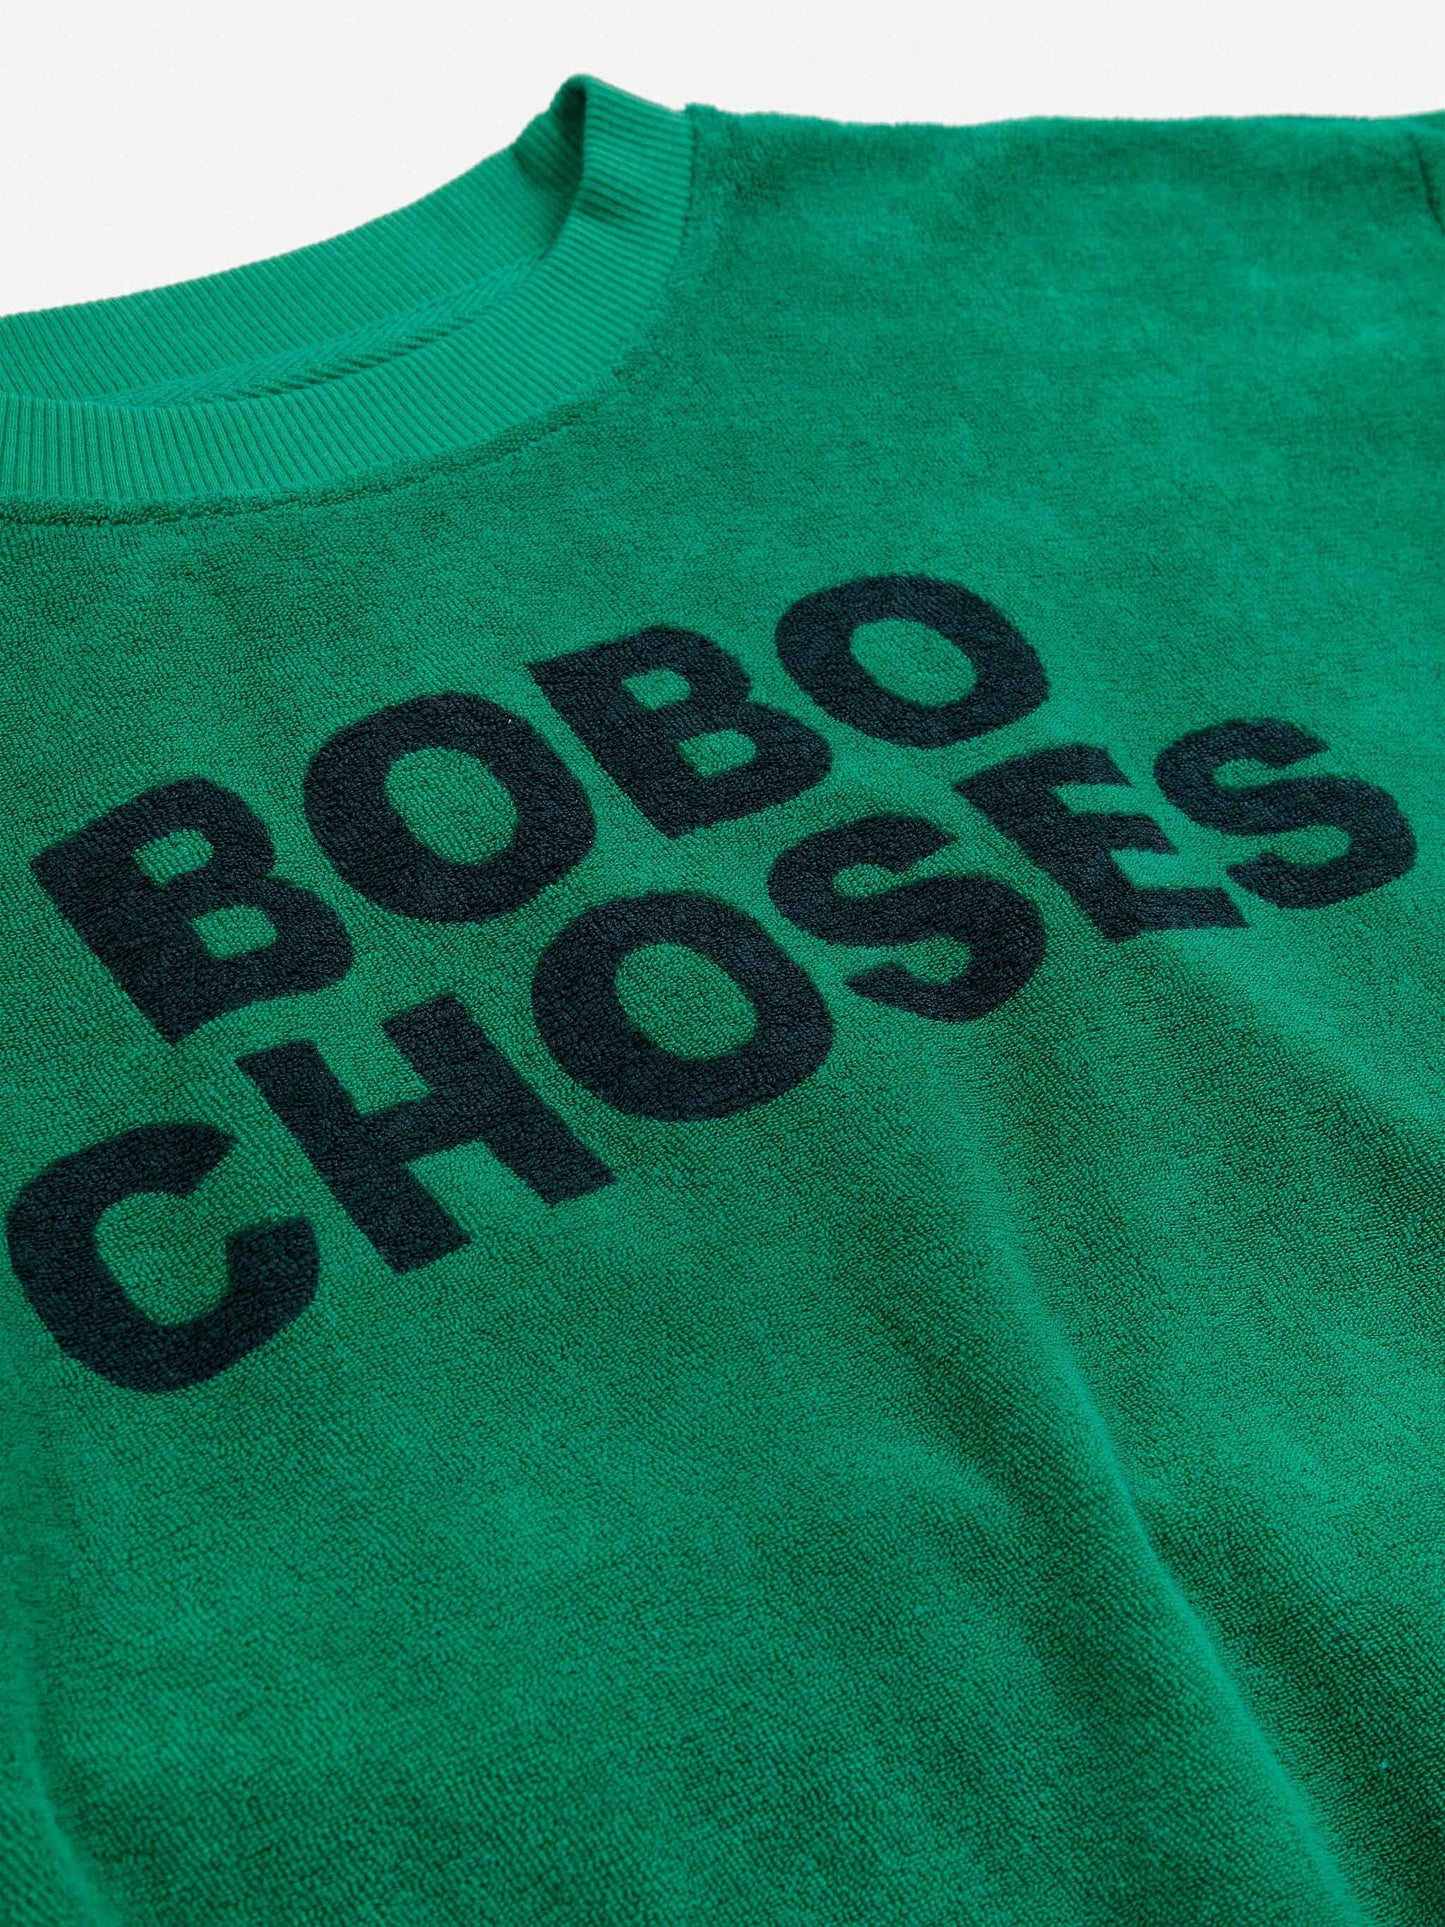 Bobo Choses green terry sweatshirt